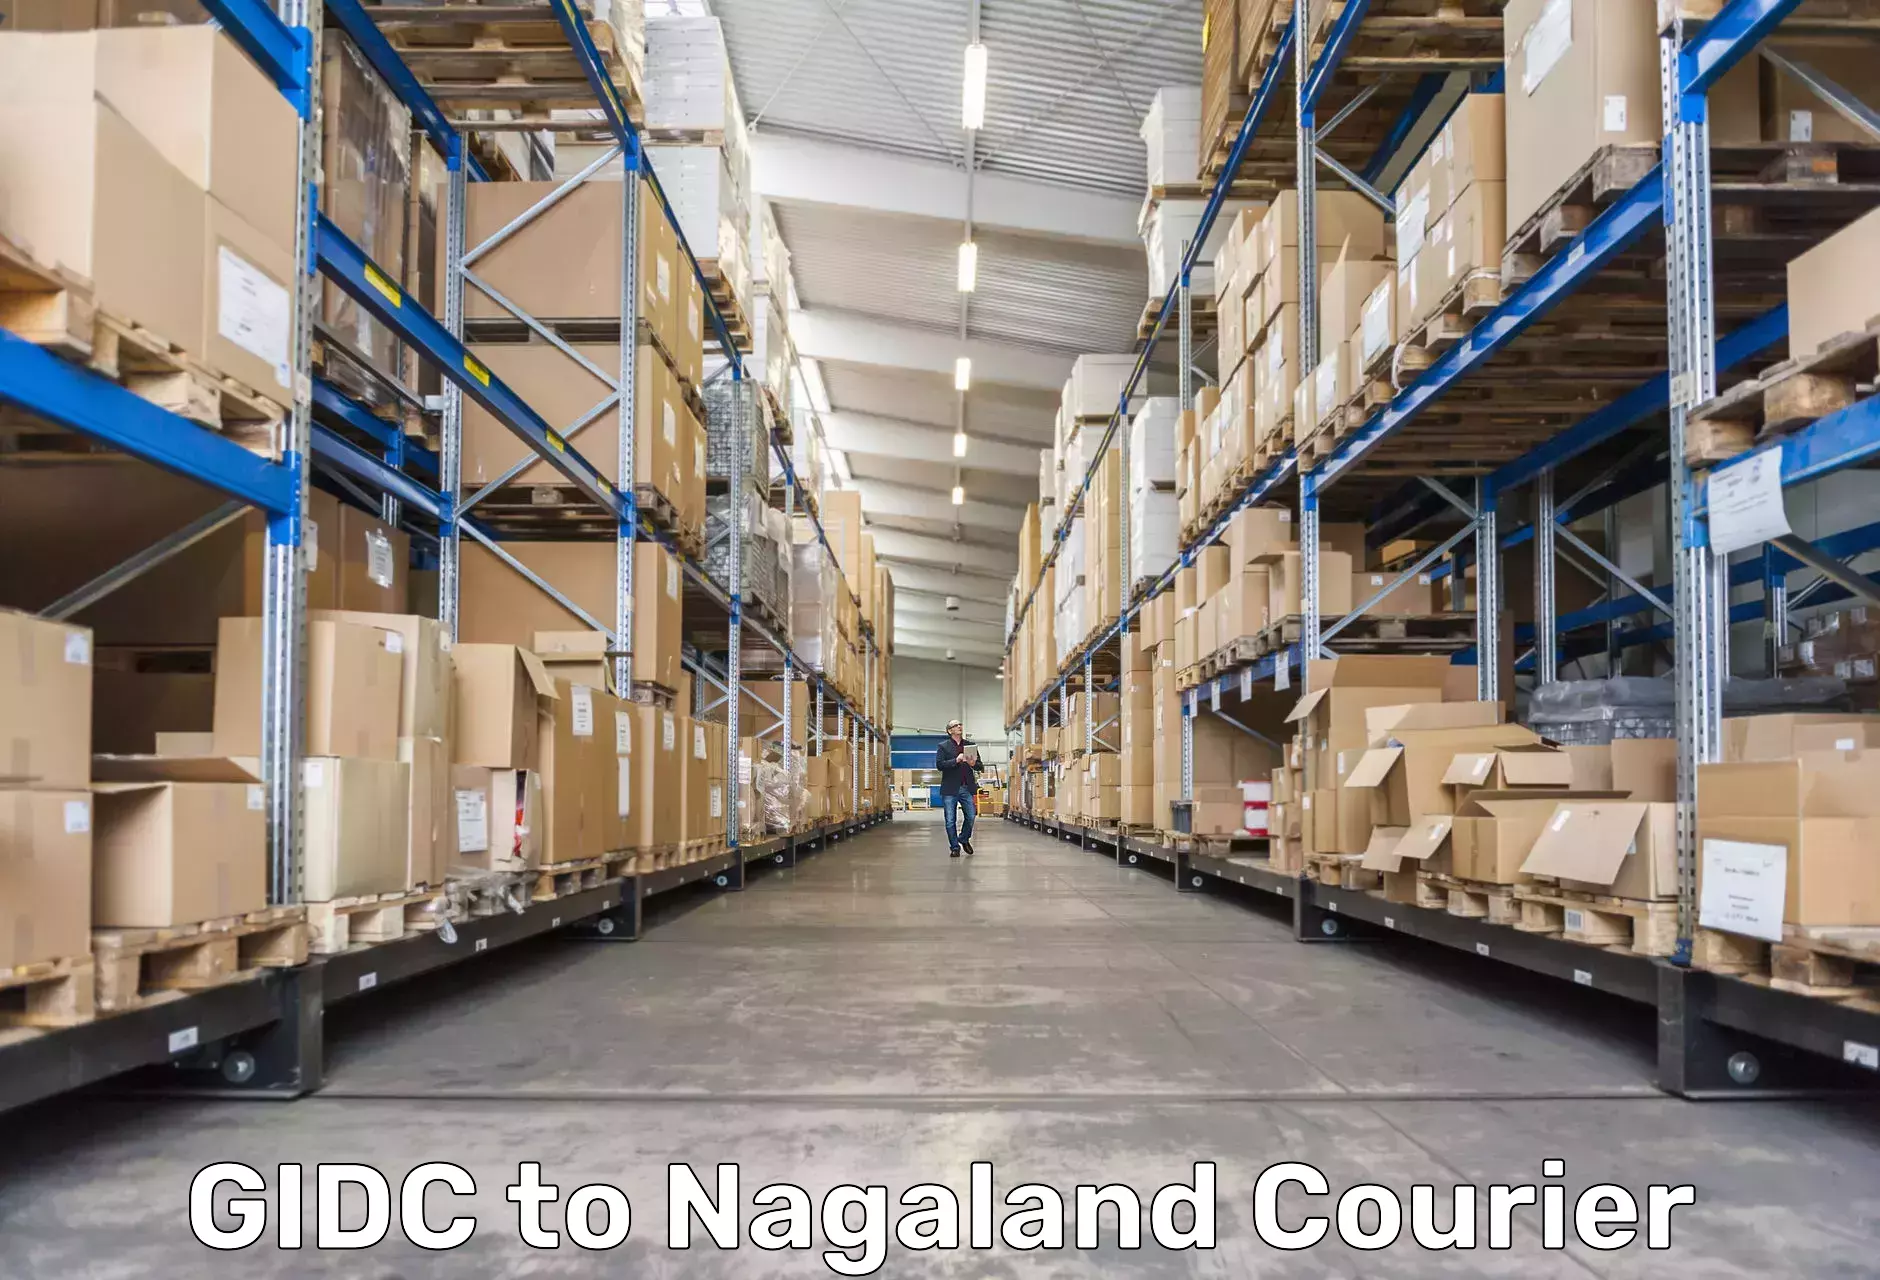 Customer-centric shipping GIDC to Nagaland